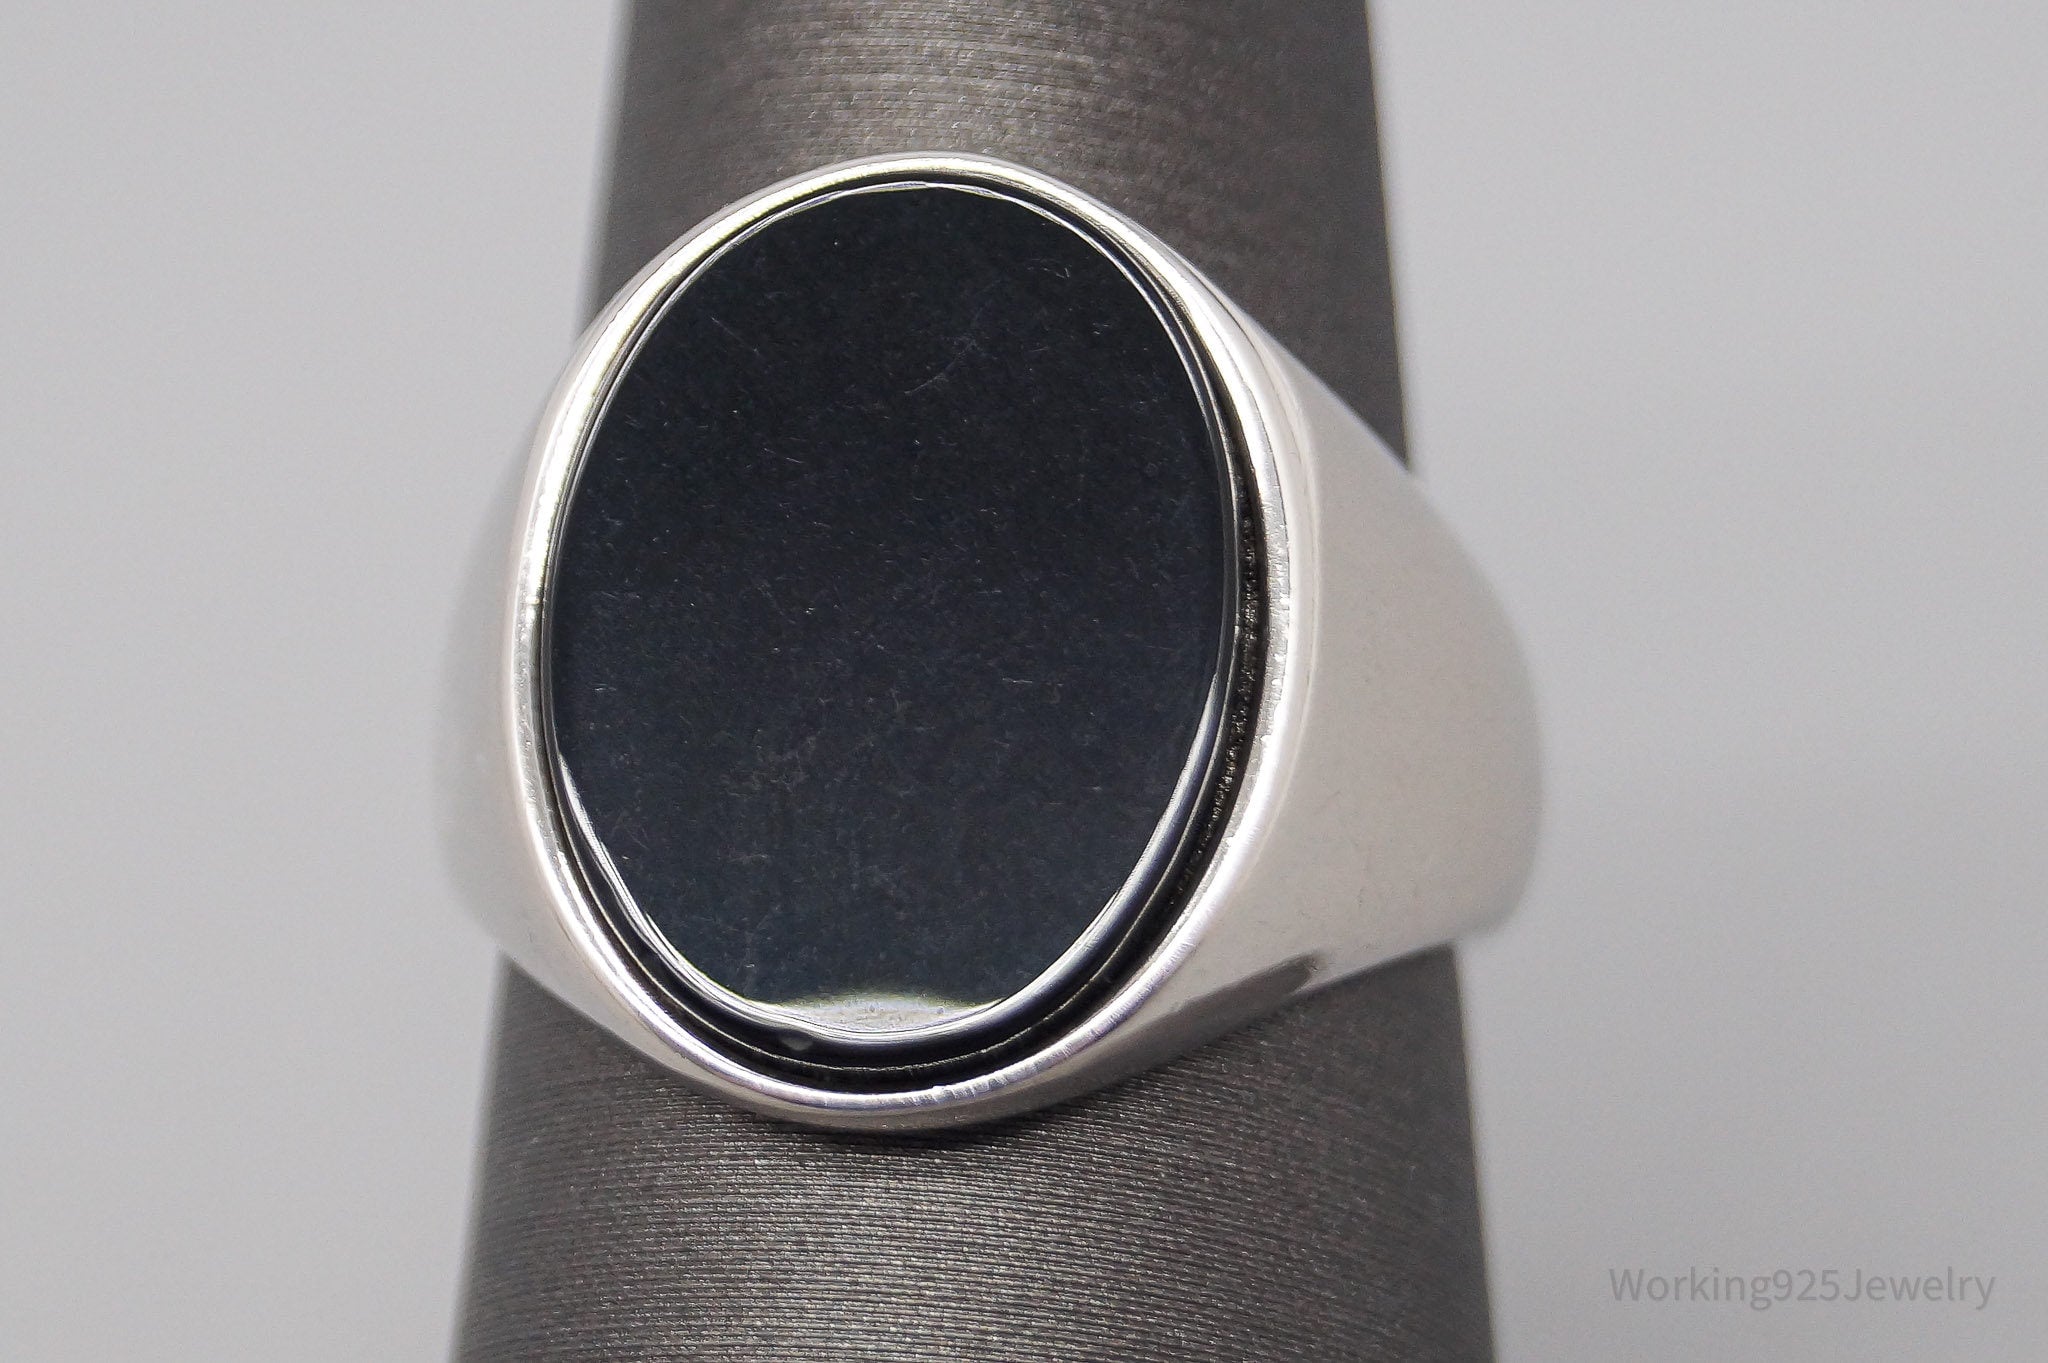 Vintage Large Black Onyx Sterling Silver Ring - Size 6.25